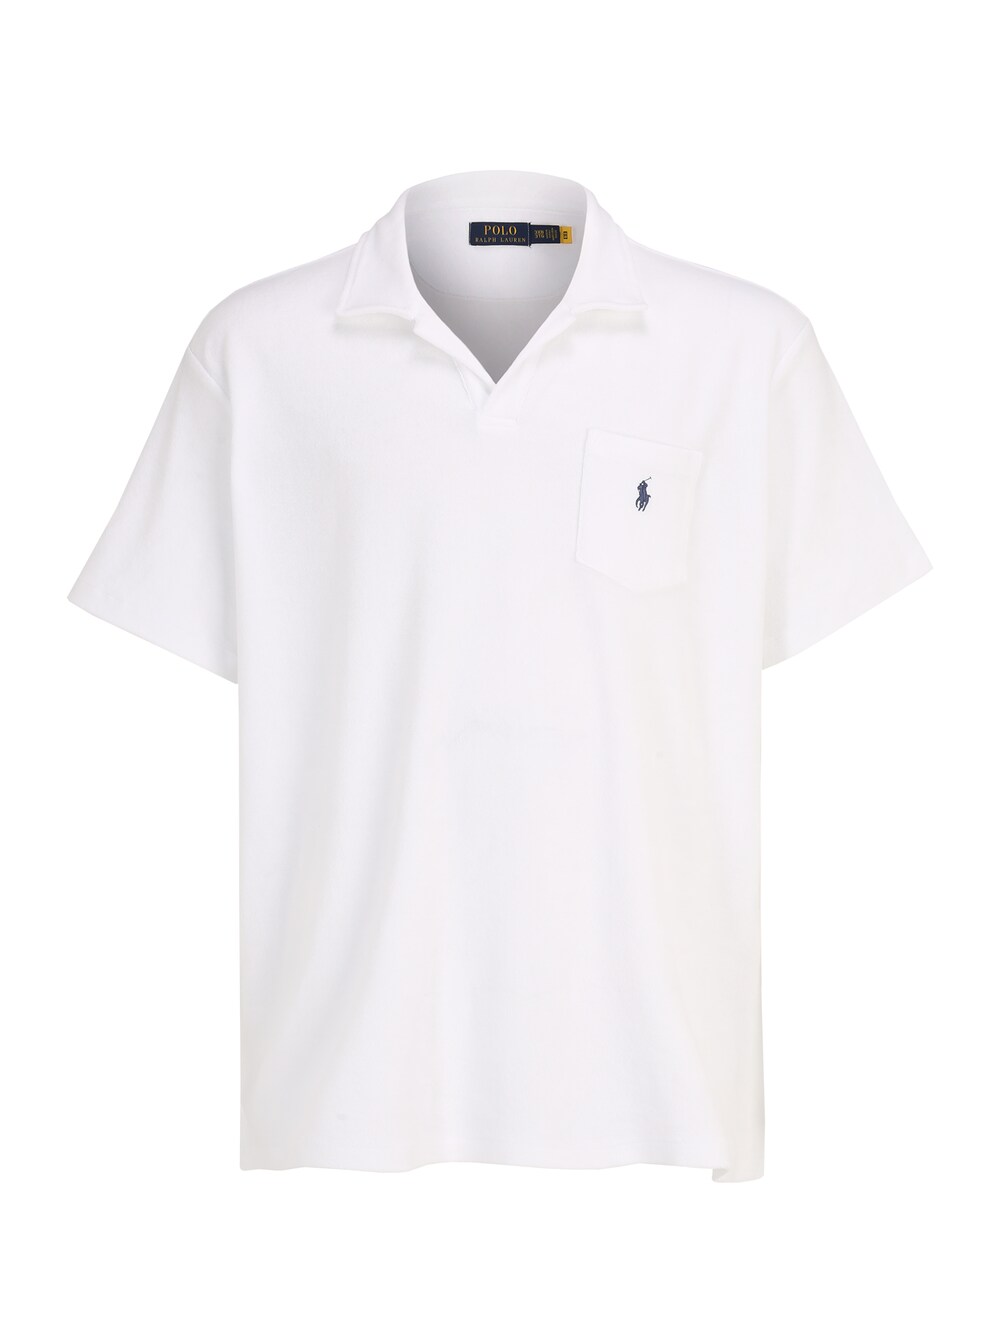 Футболка Polo Ralph Lauren Big & Tall, белый базовая футболка polo ralph lauren big